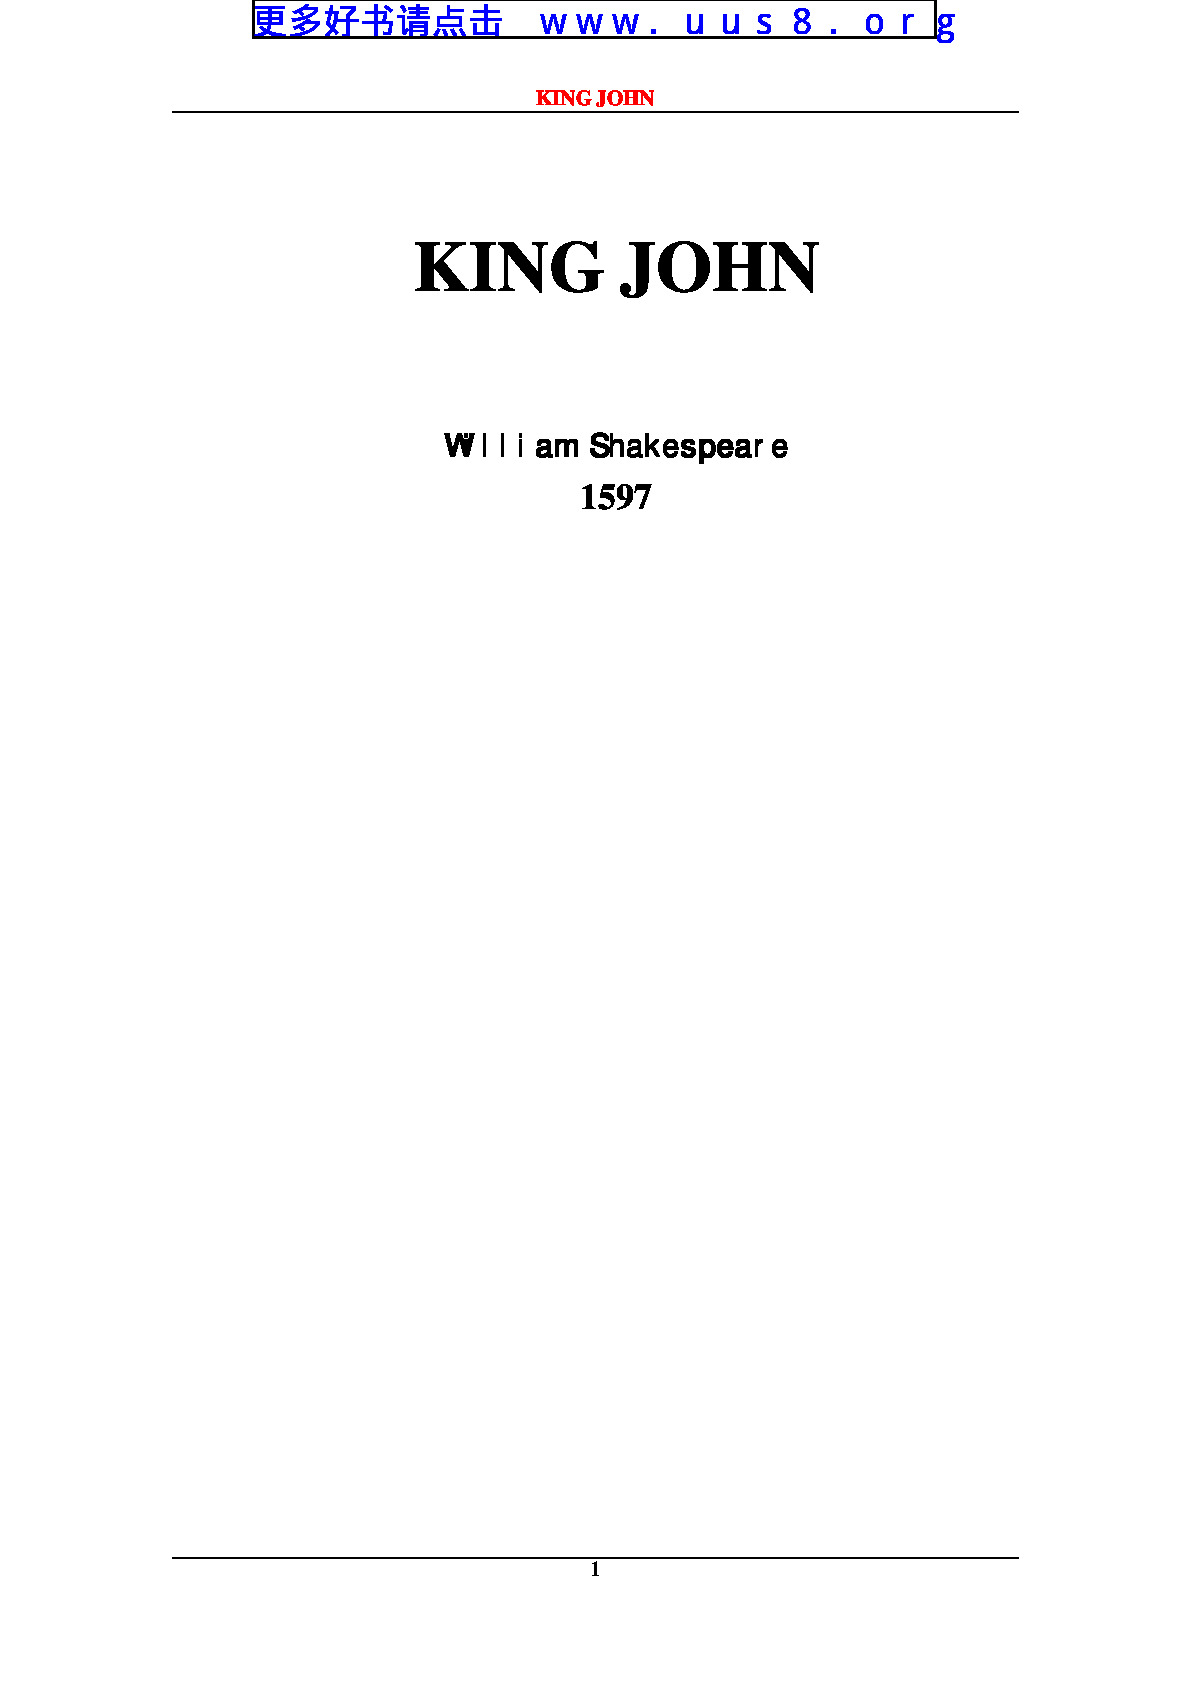 King_John(约翰王)